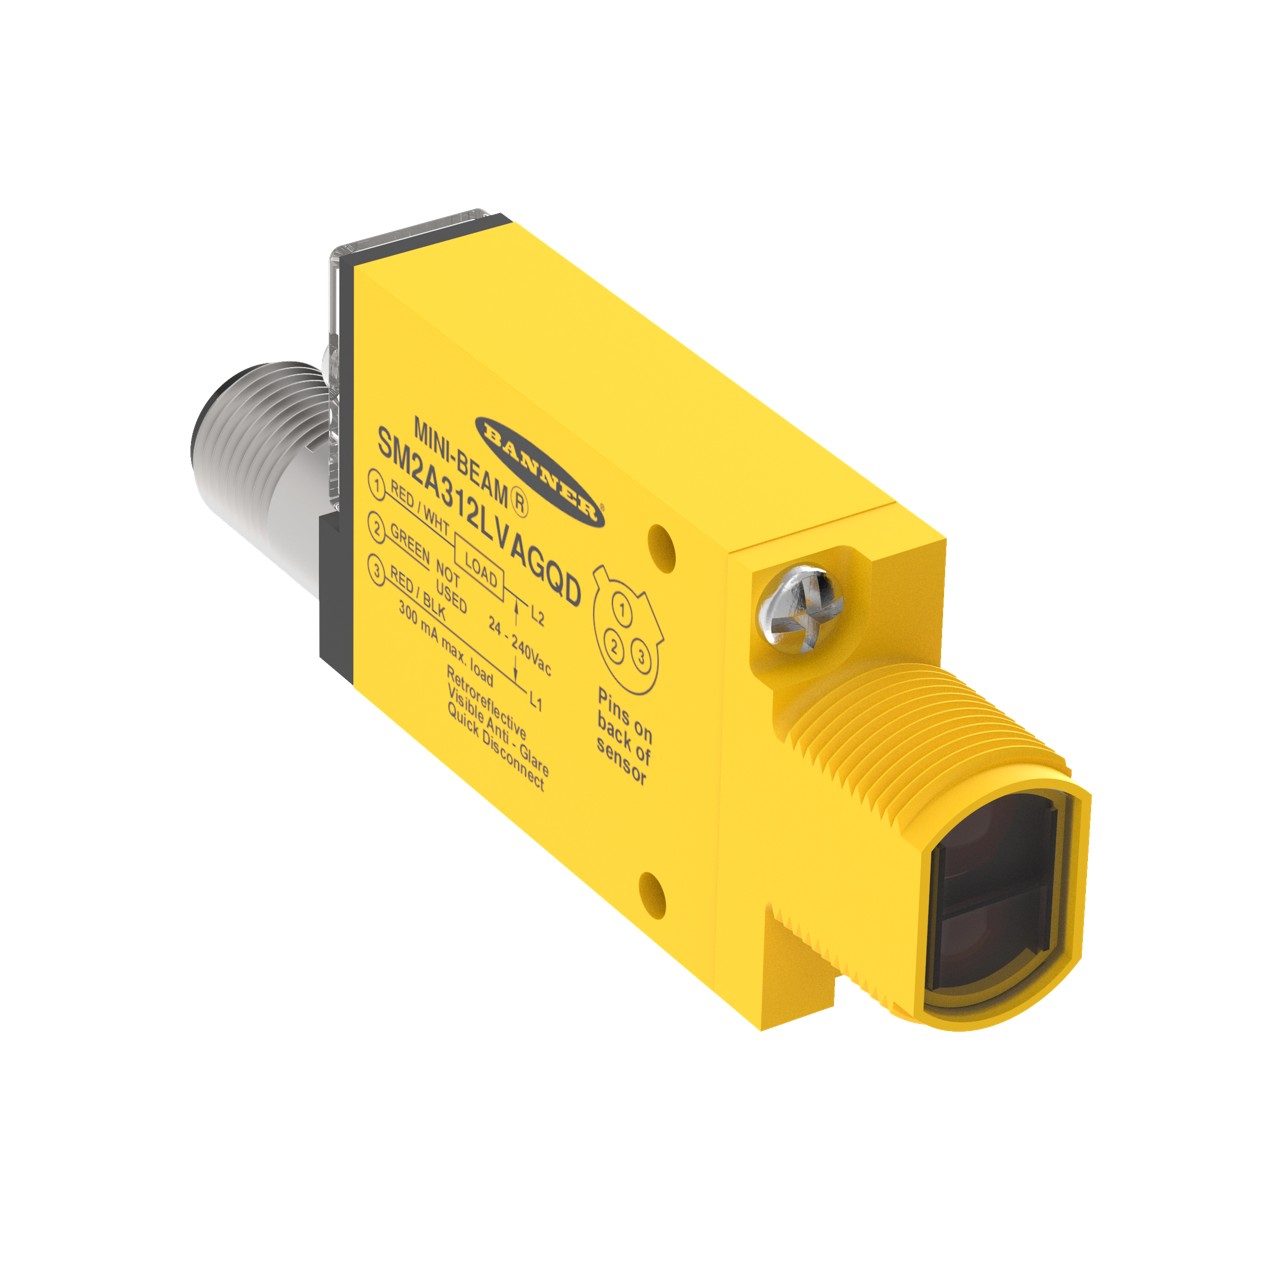 SM2A312LVAGQD - MINI-BEAM: Polarized Retro; Range: 50 mm - 2 m; Input: 24-240 V ac; Output: SPST Solid-State 2-Wire; 3-pin Micro Integral QD